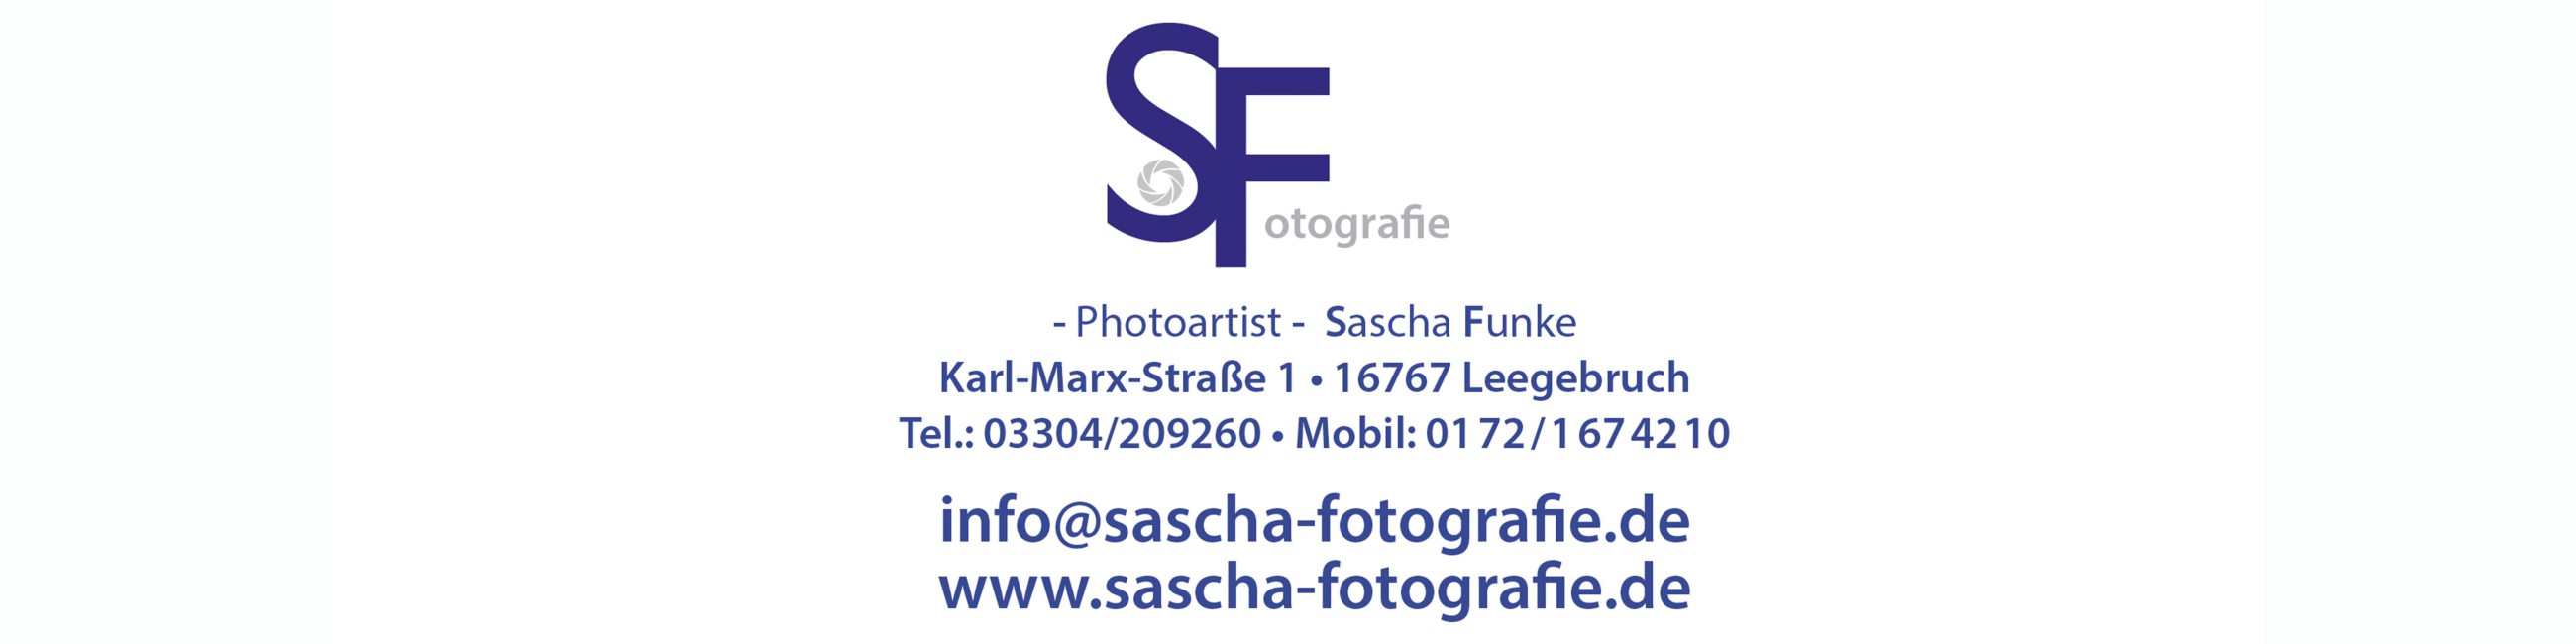 (c) Sascha-fotografie.de